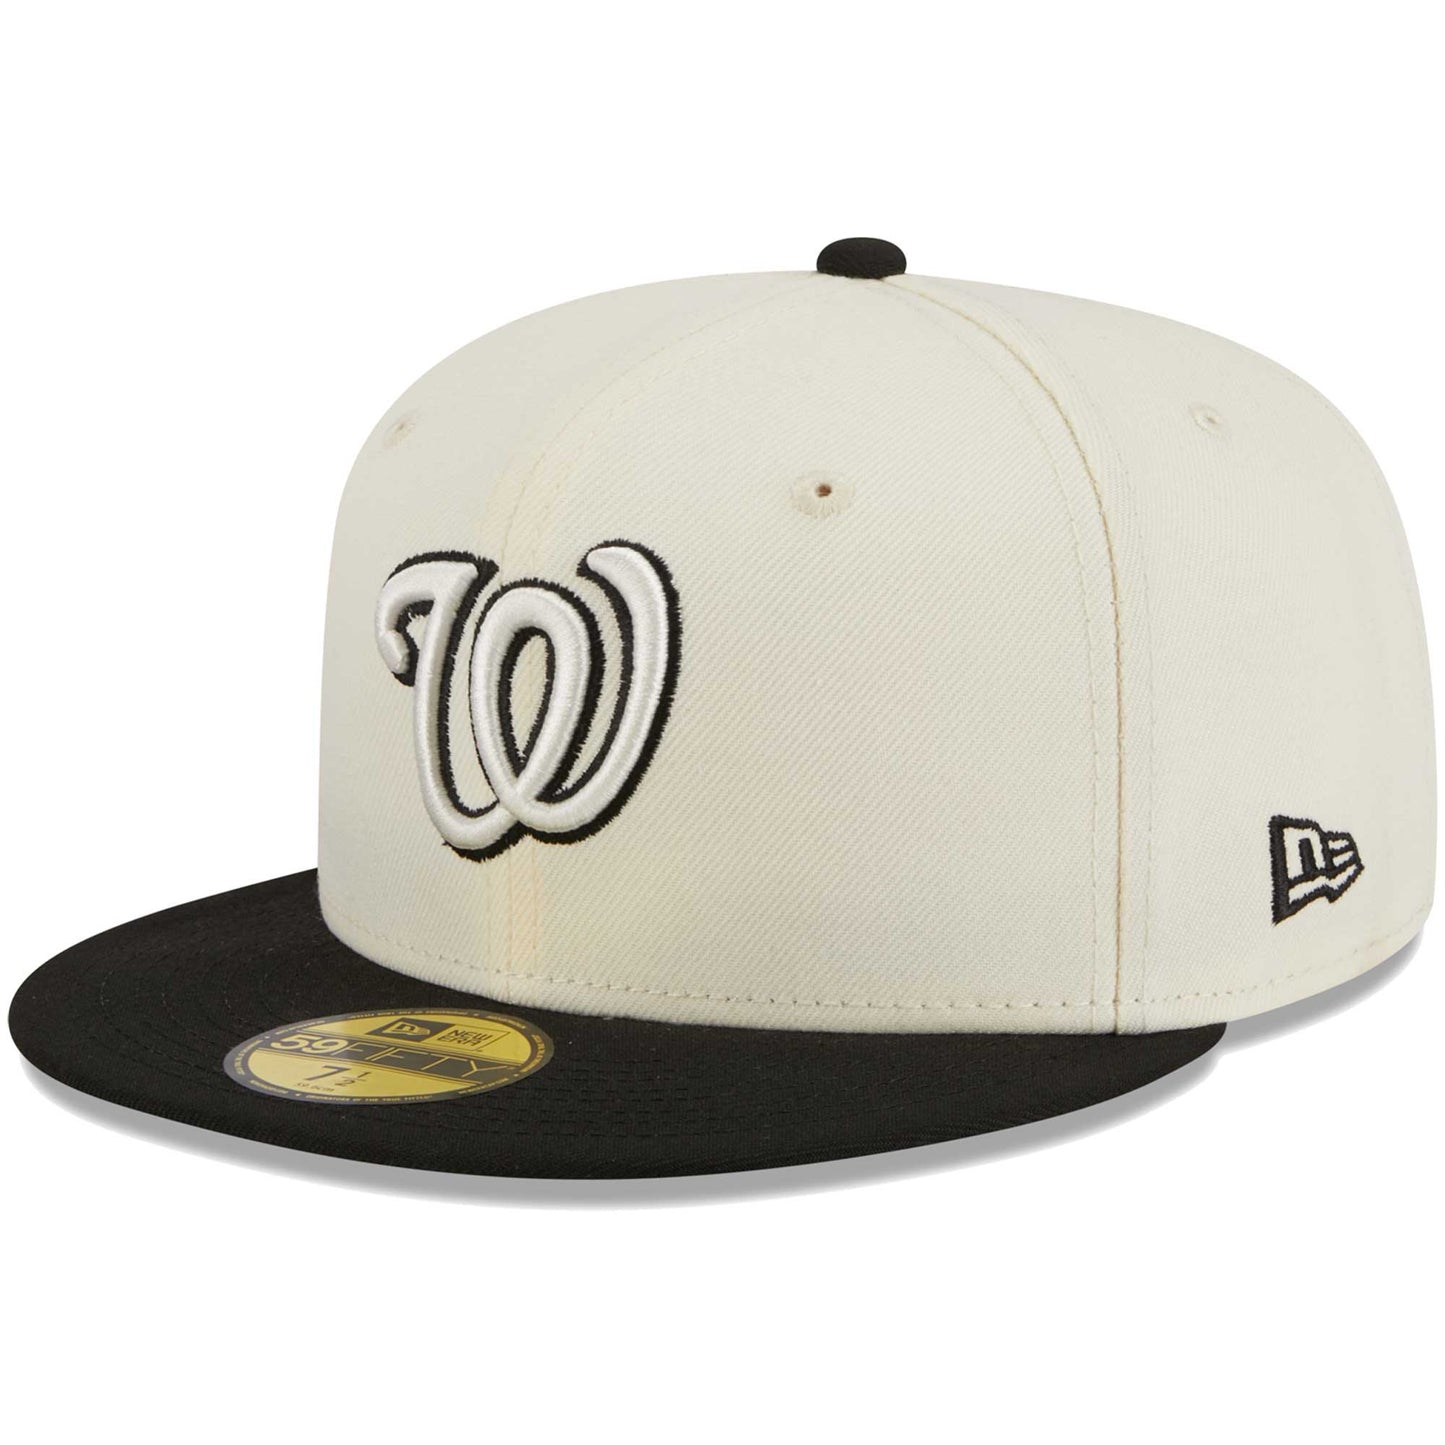 Washington Nationals New Era Chrome 59FIFTY Fitted Hat - Stone/Black